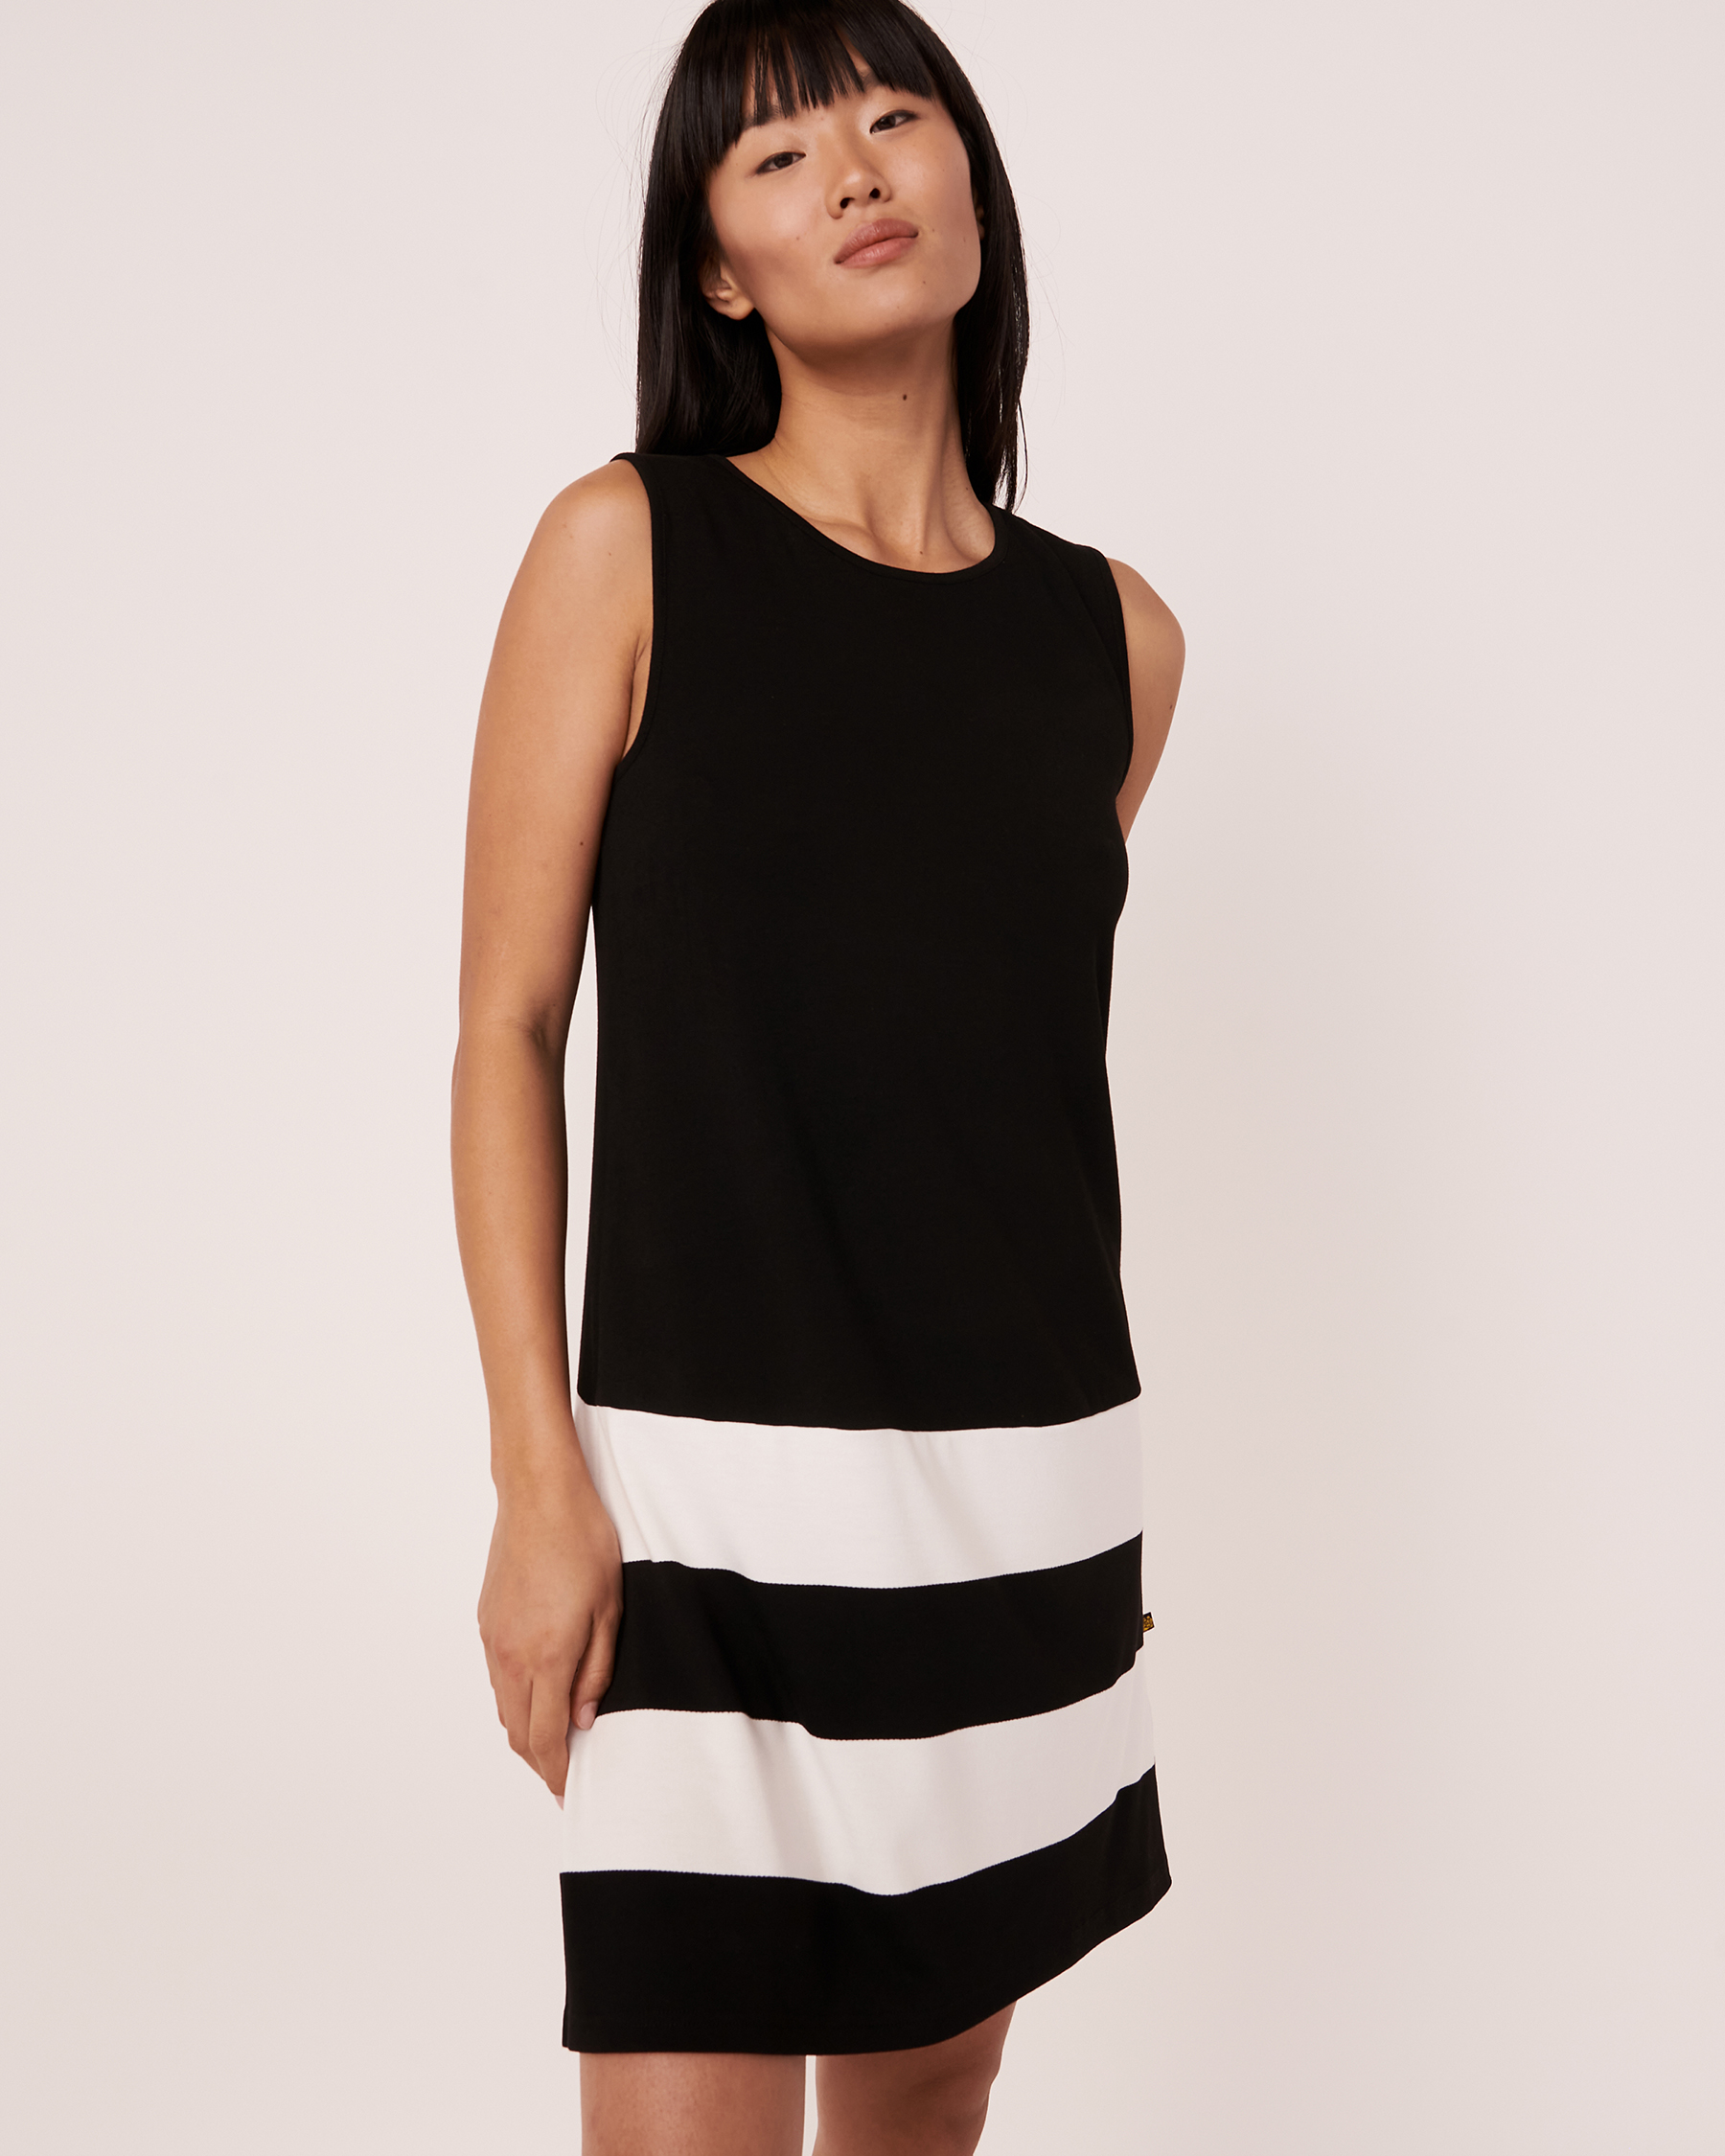 LA VIE EN ROSE AQUA Straight Fit Mini Dress Black and white detail 80300025 - View1